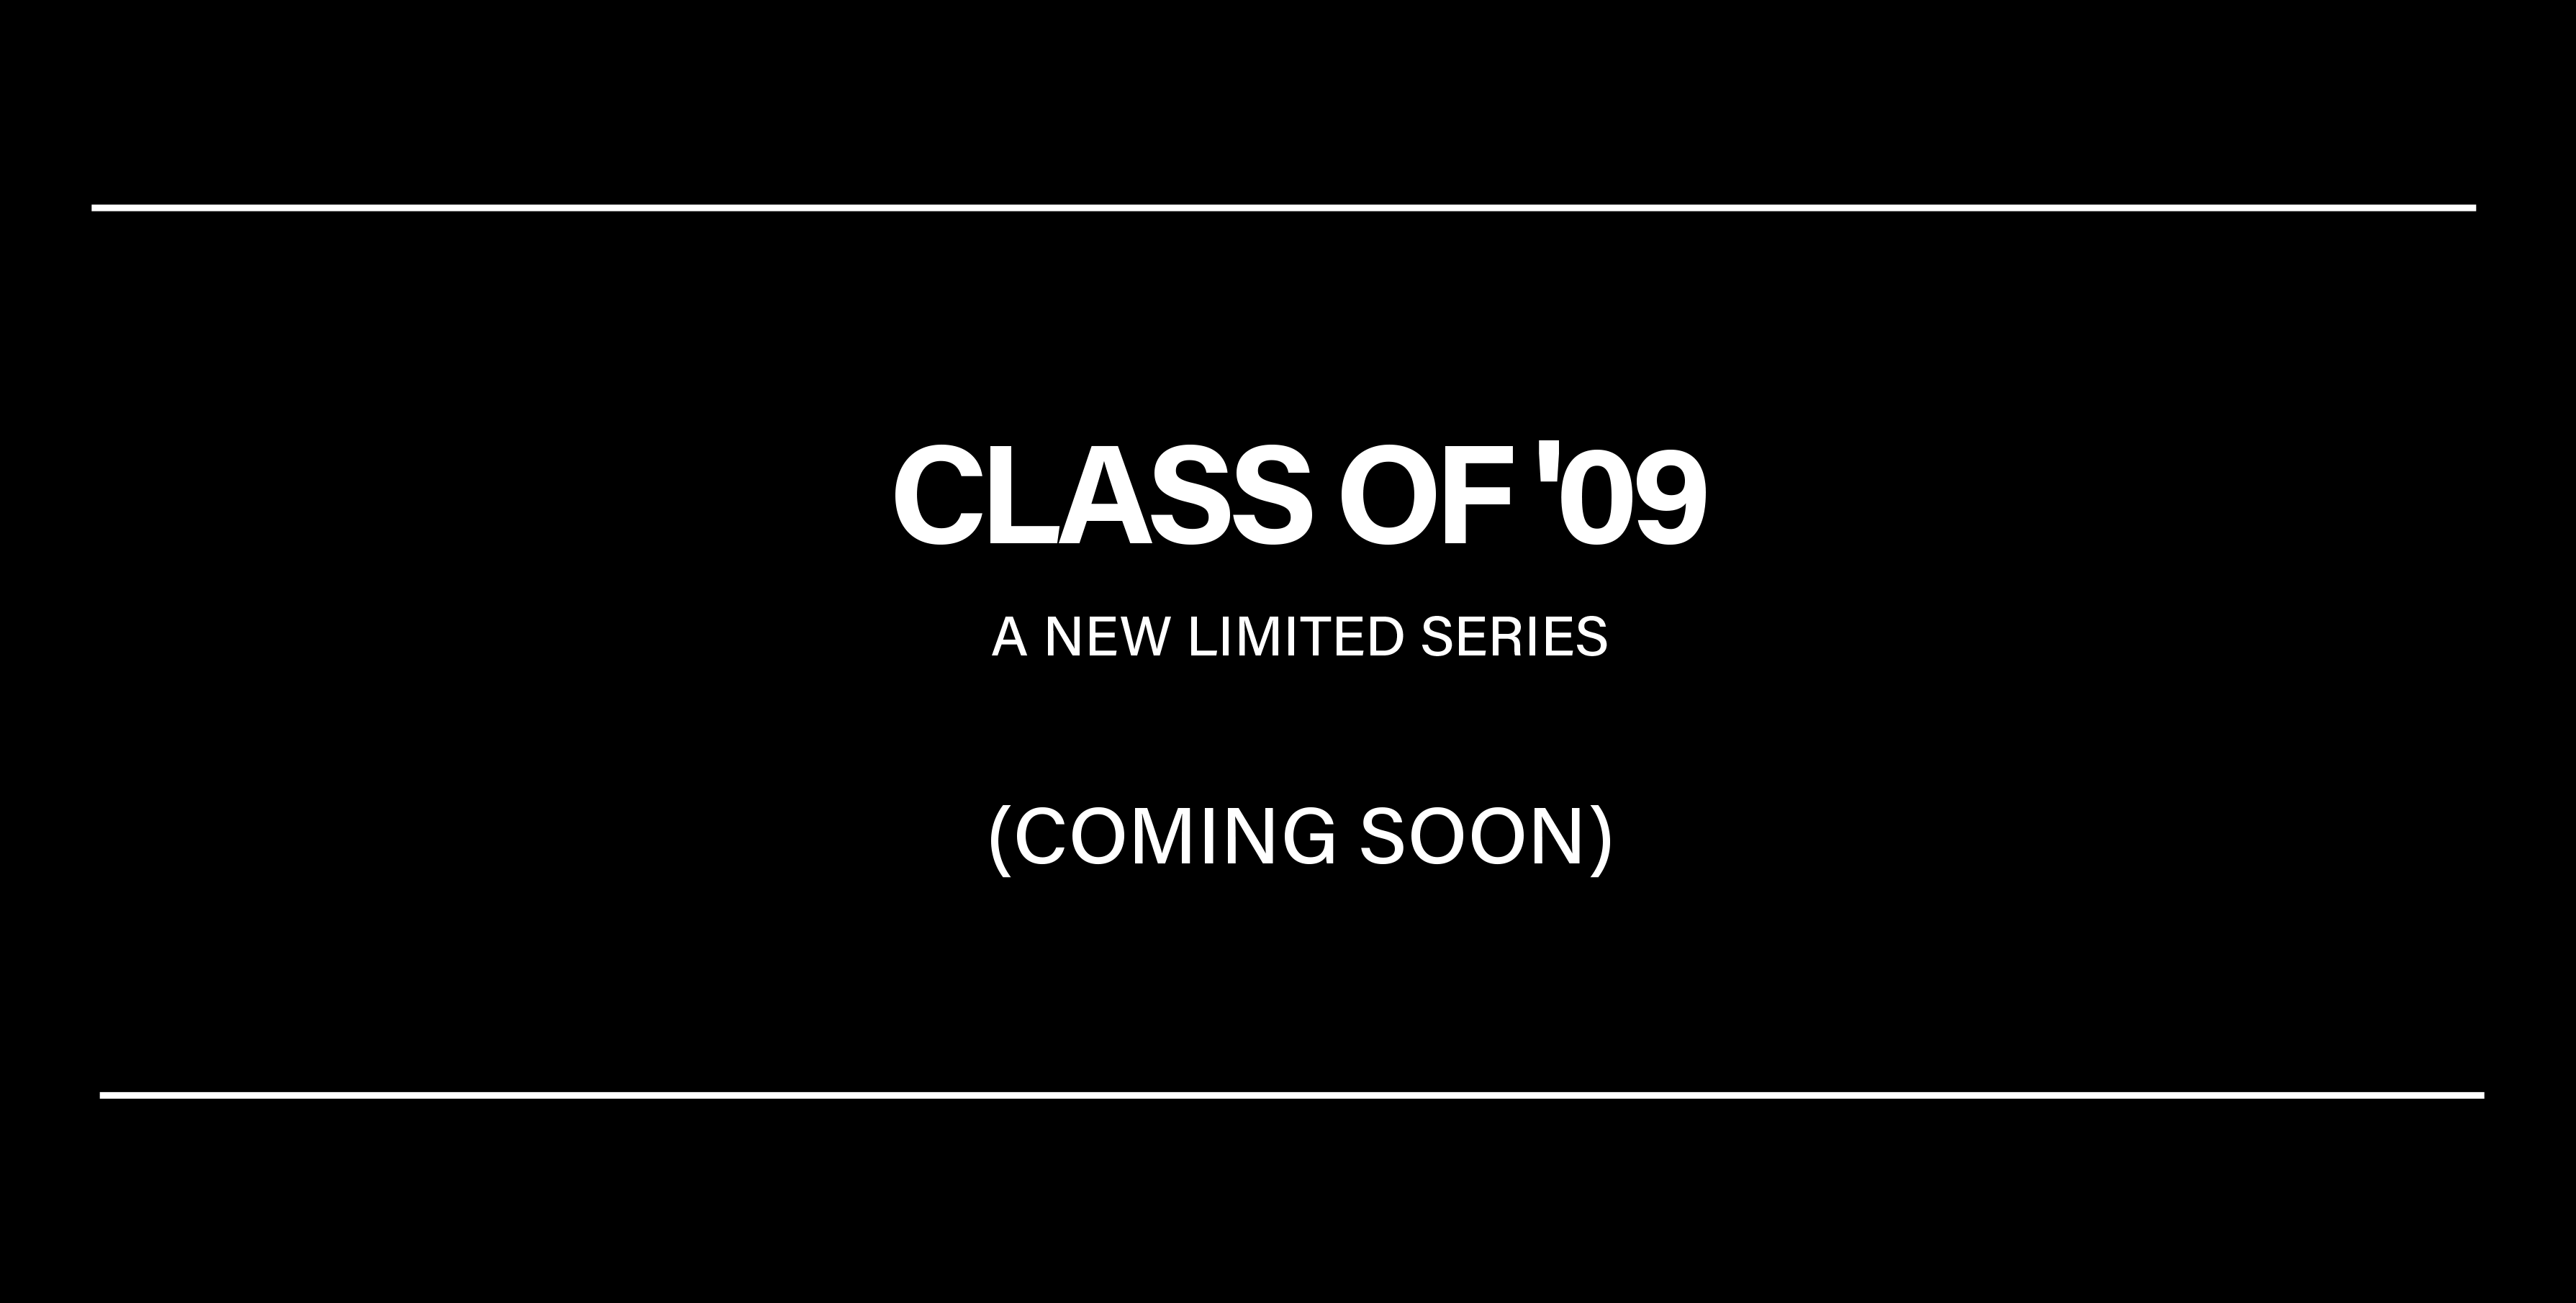 CLASS OF ‘09 